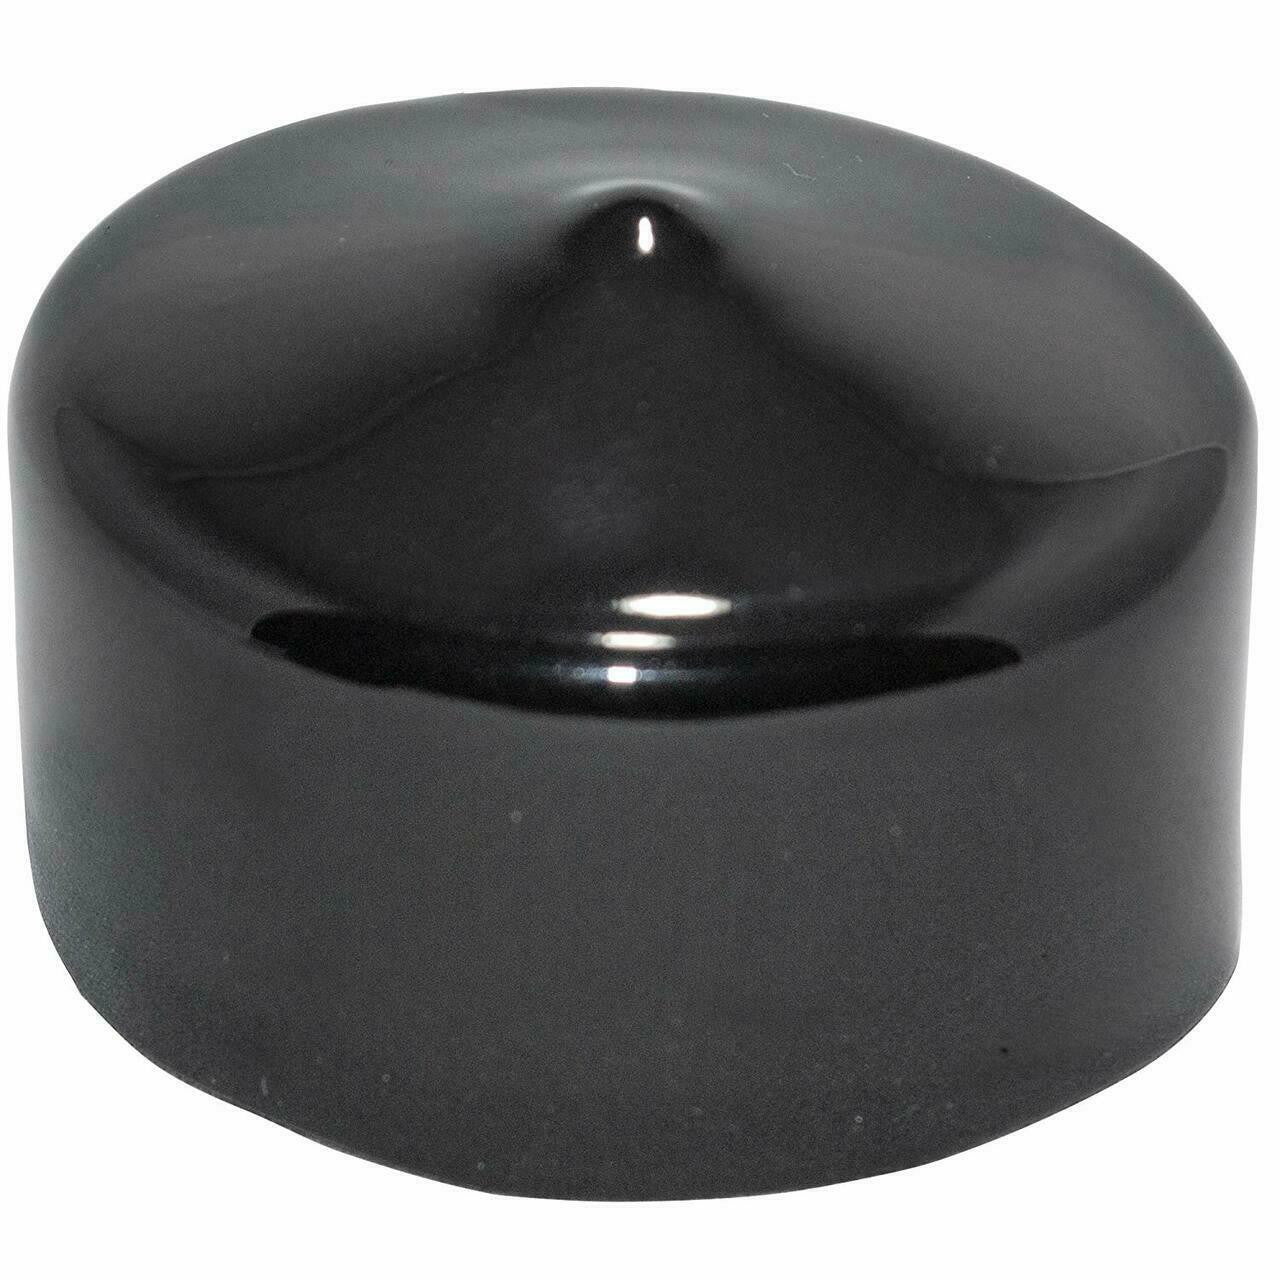 Latham 06101 Vinyl End Cap / Beauty Cap For Step Seal Strip Faceplate/Cap